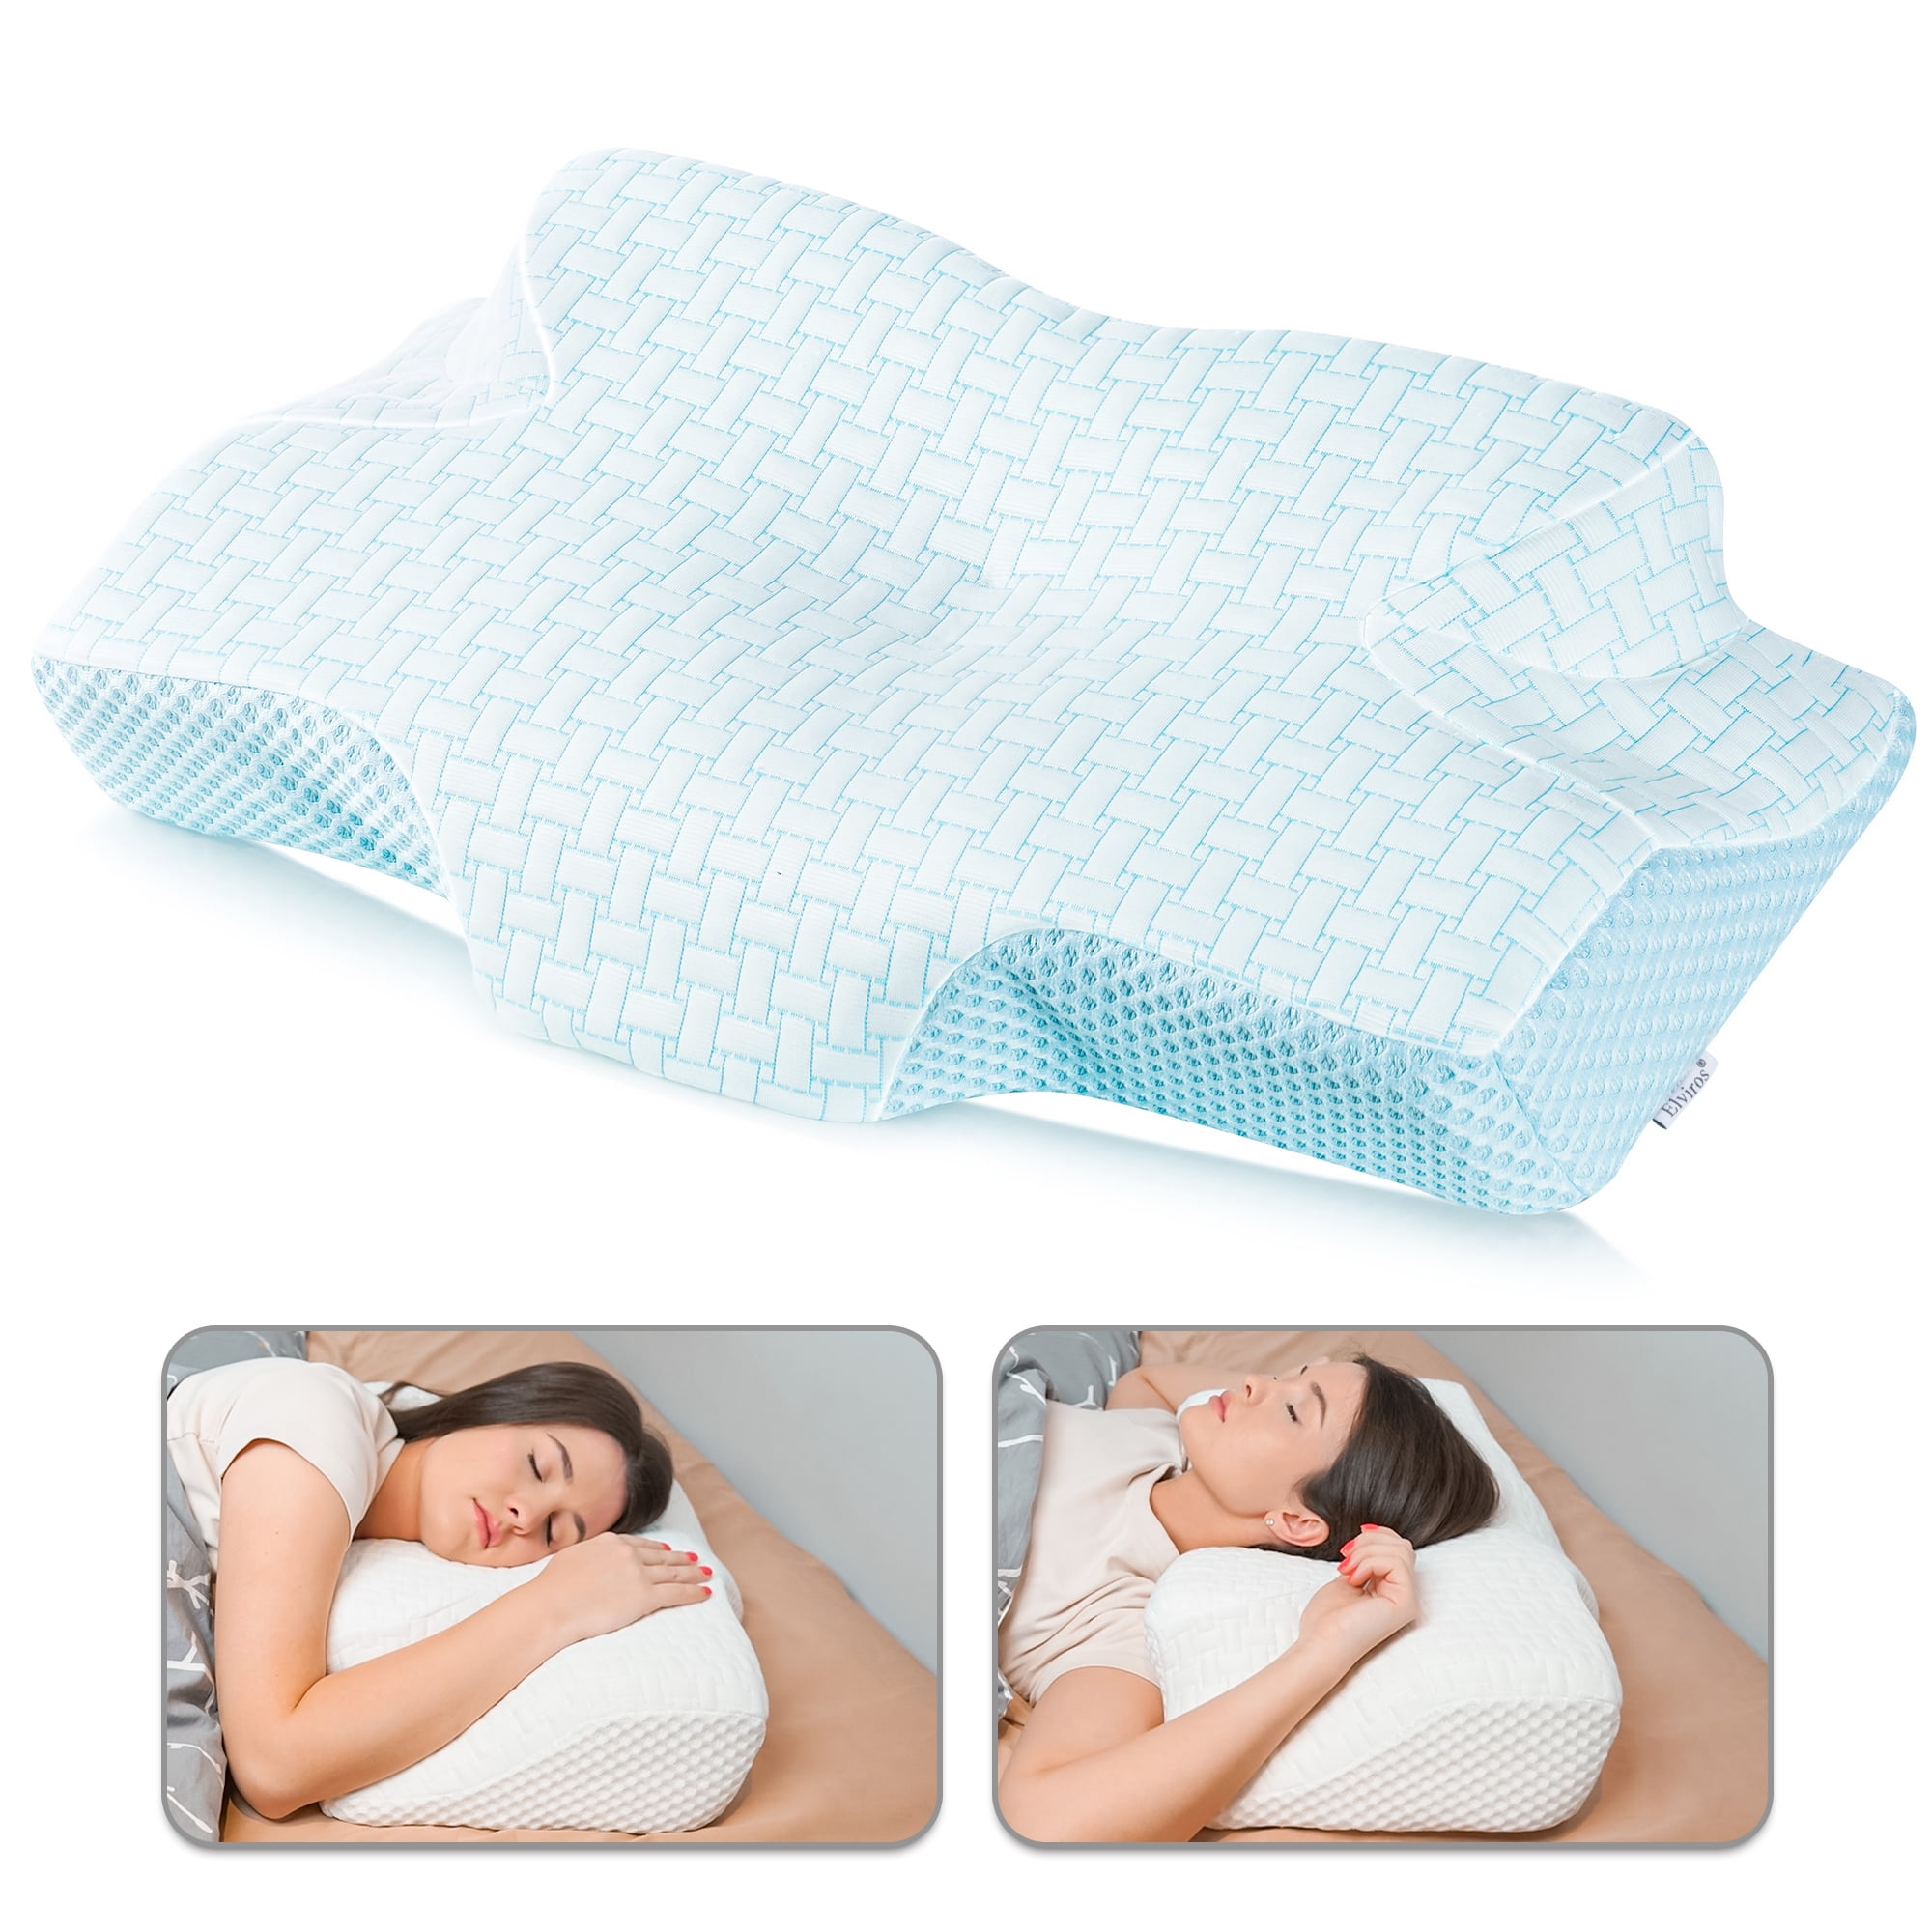 Elviros Cervical Memory Foam Pillow Contour Pillows for Neck and Shoulder Pain 